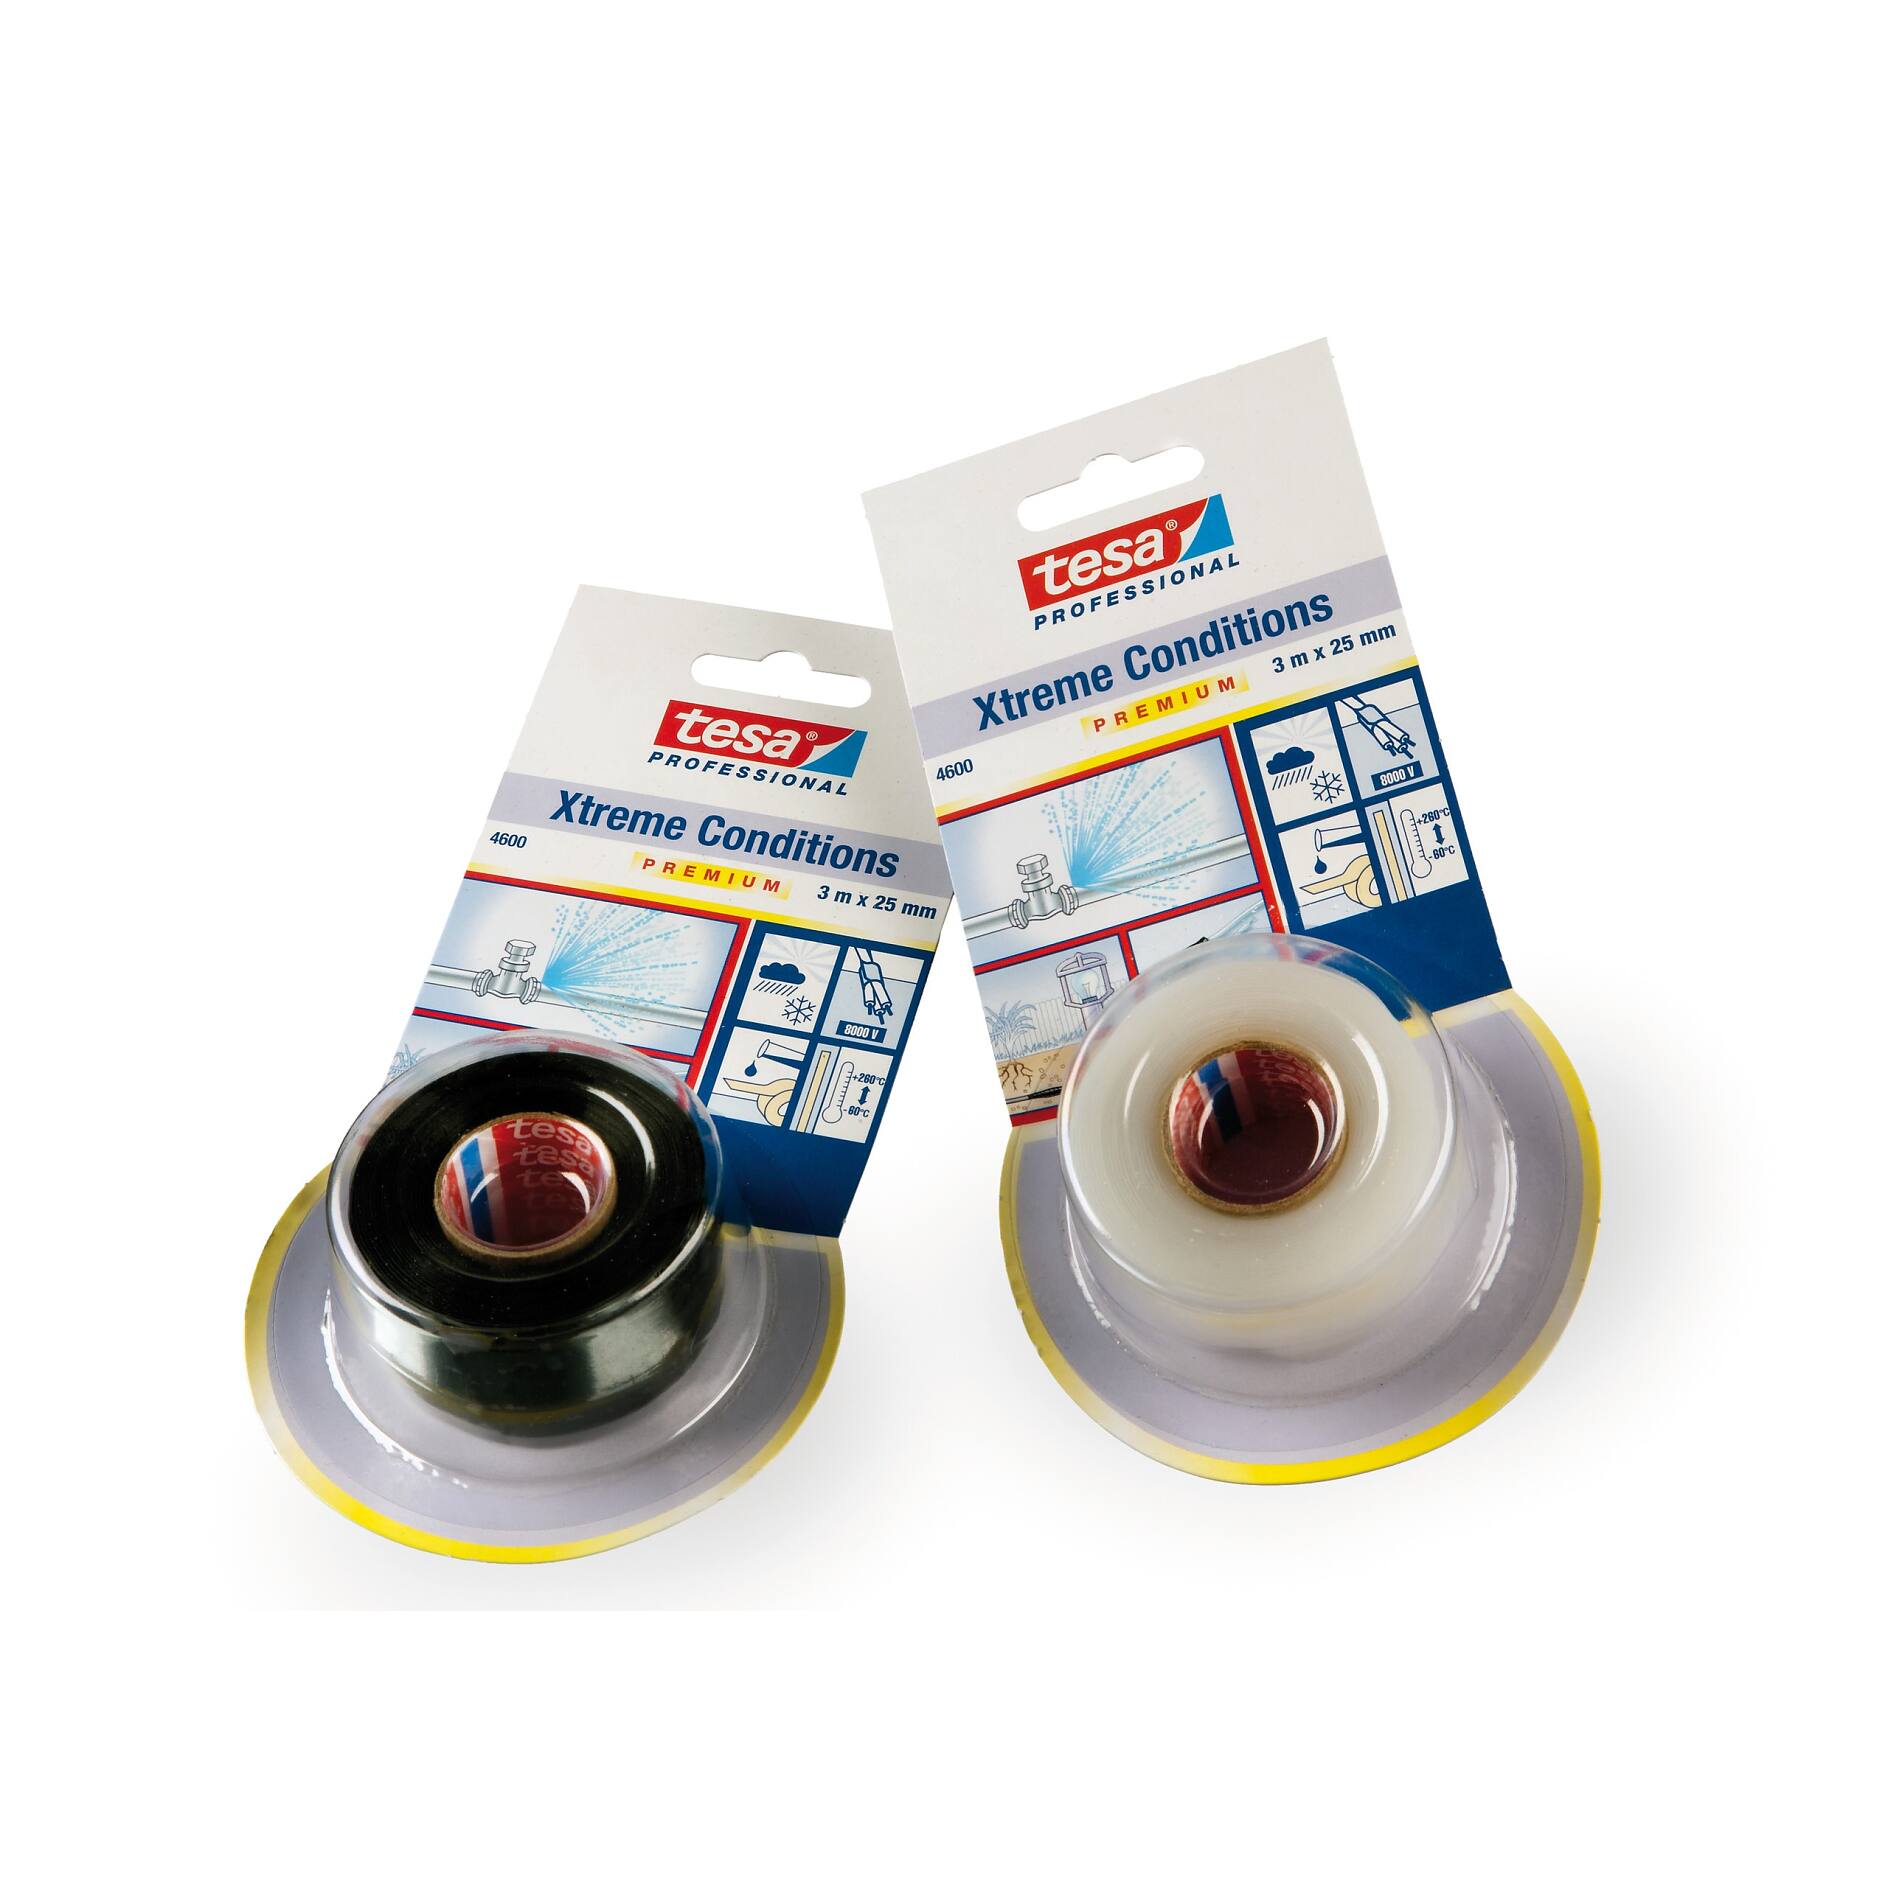 Heavy duty duct tape - Tesa 4663 - Shand Higson & Co Ltd